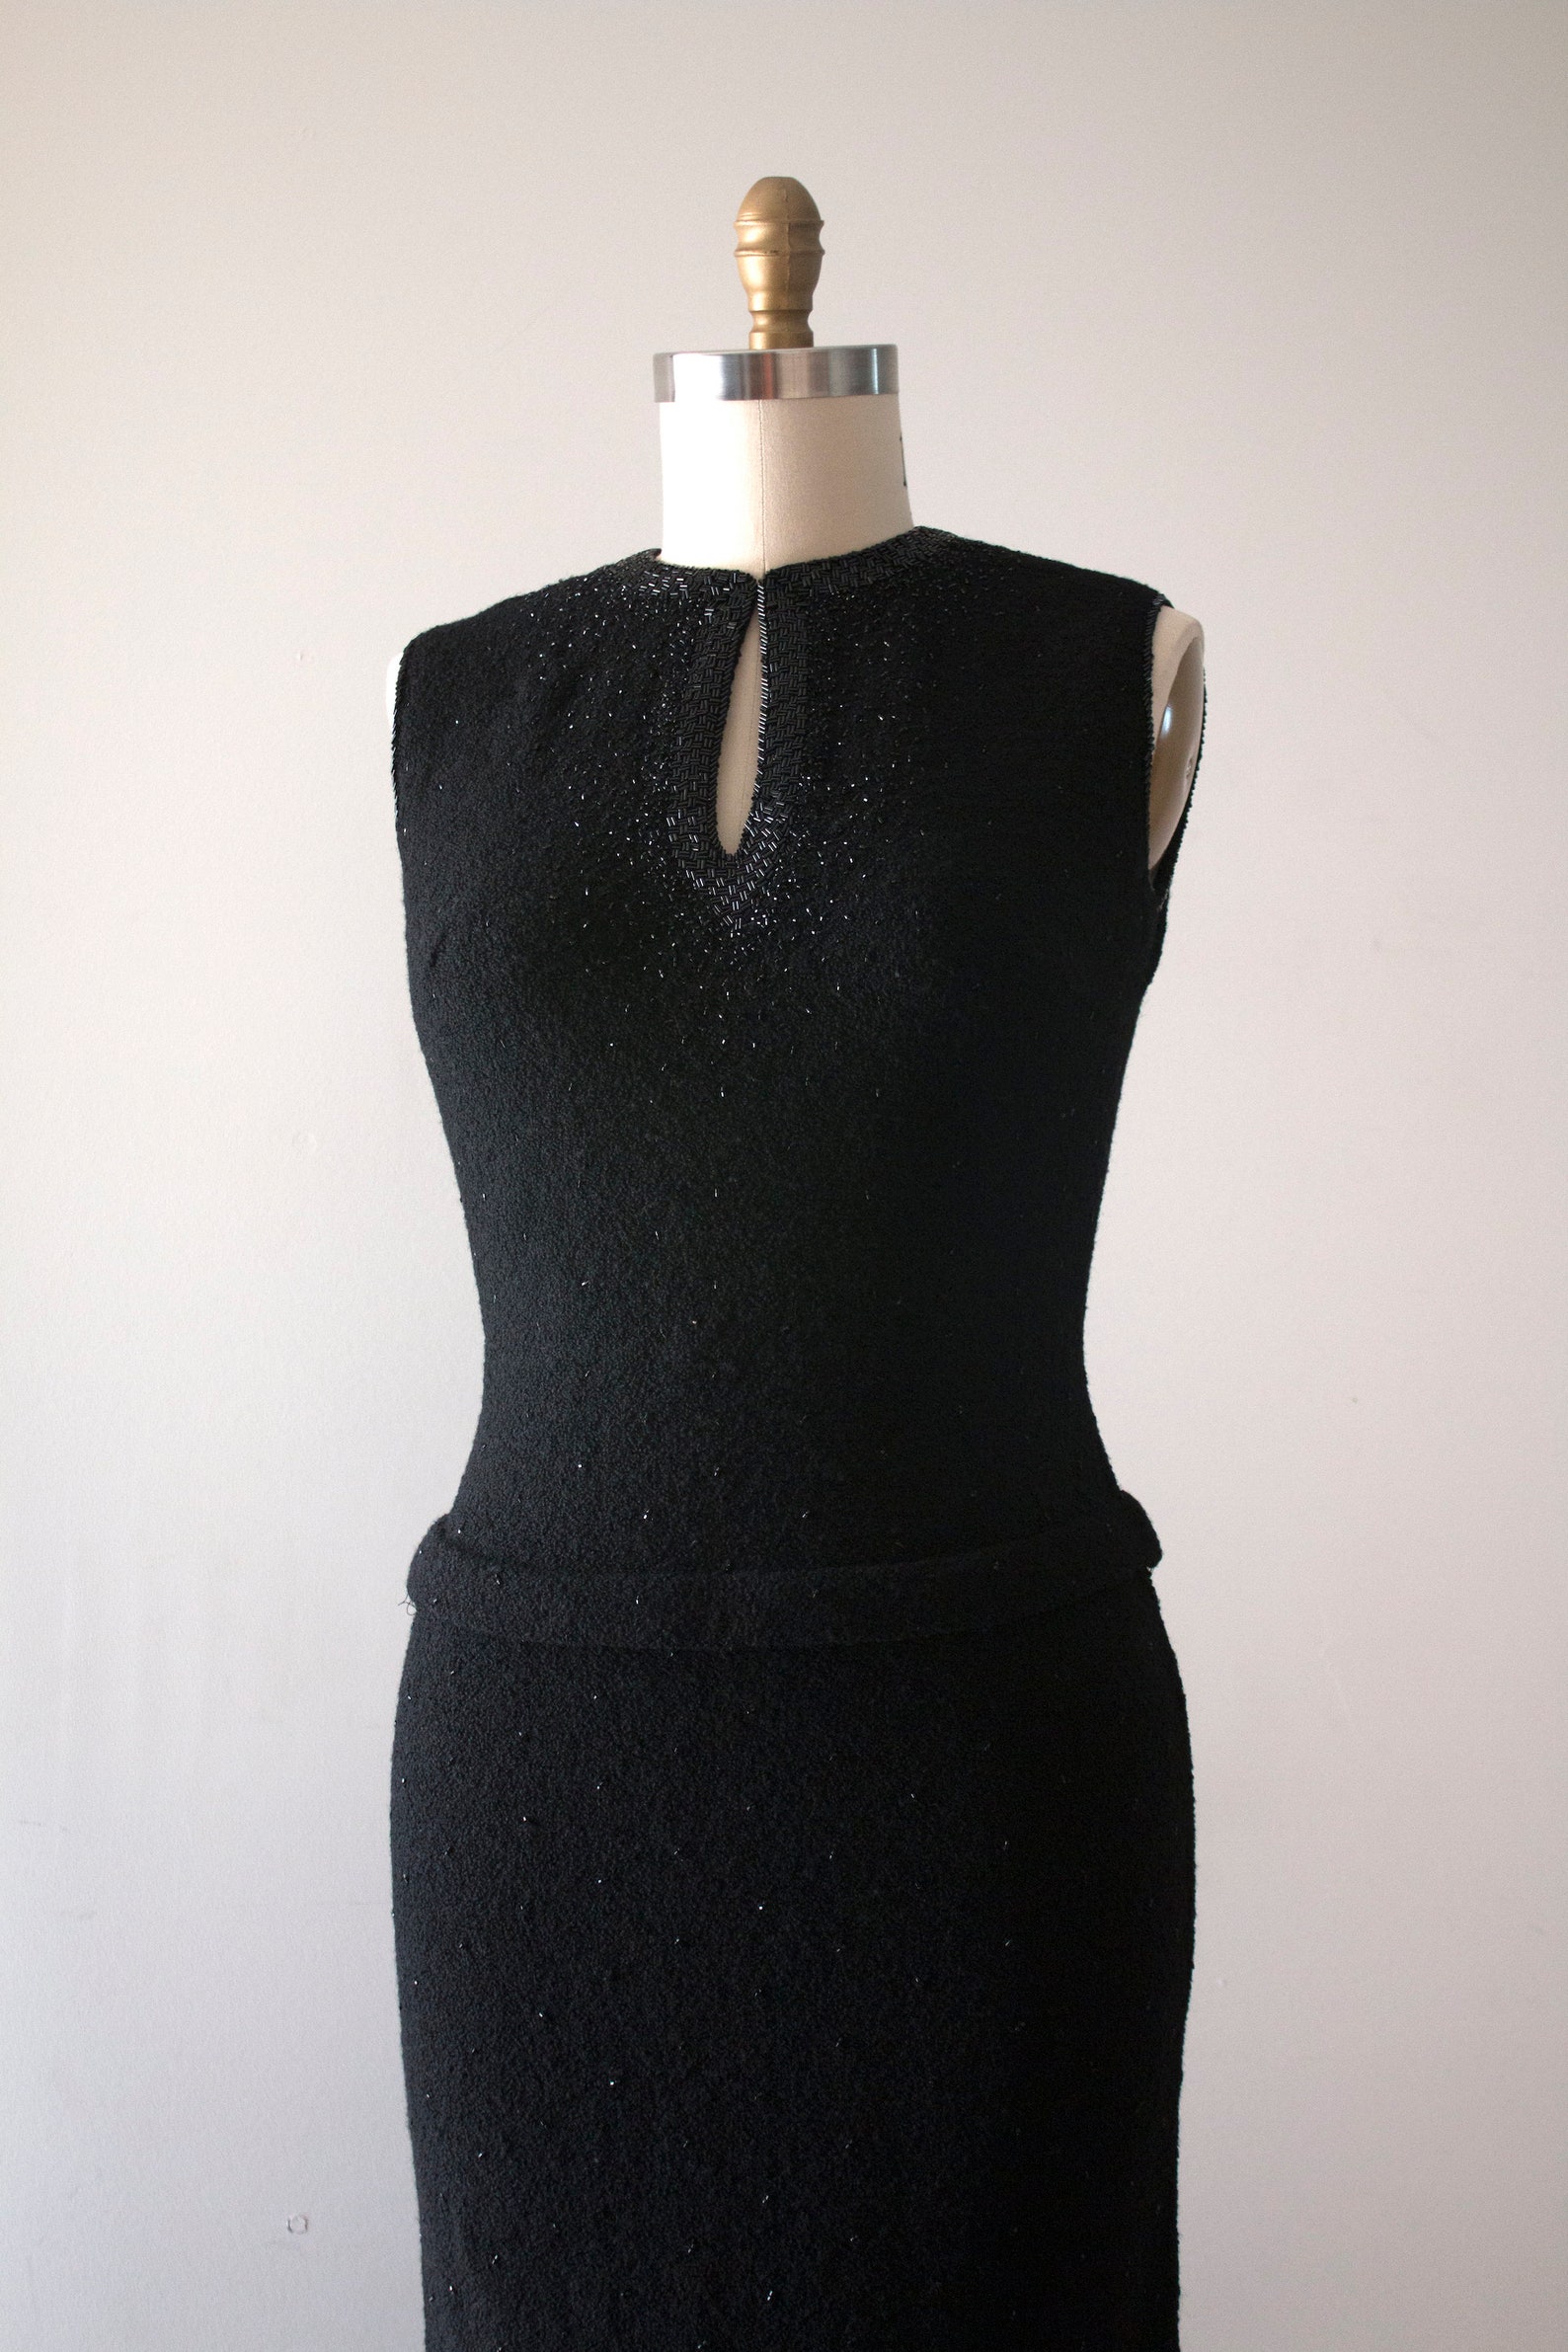 Vintage 1950s Gene Shelly beaded knit dress | Etsy